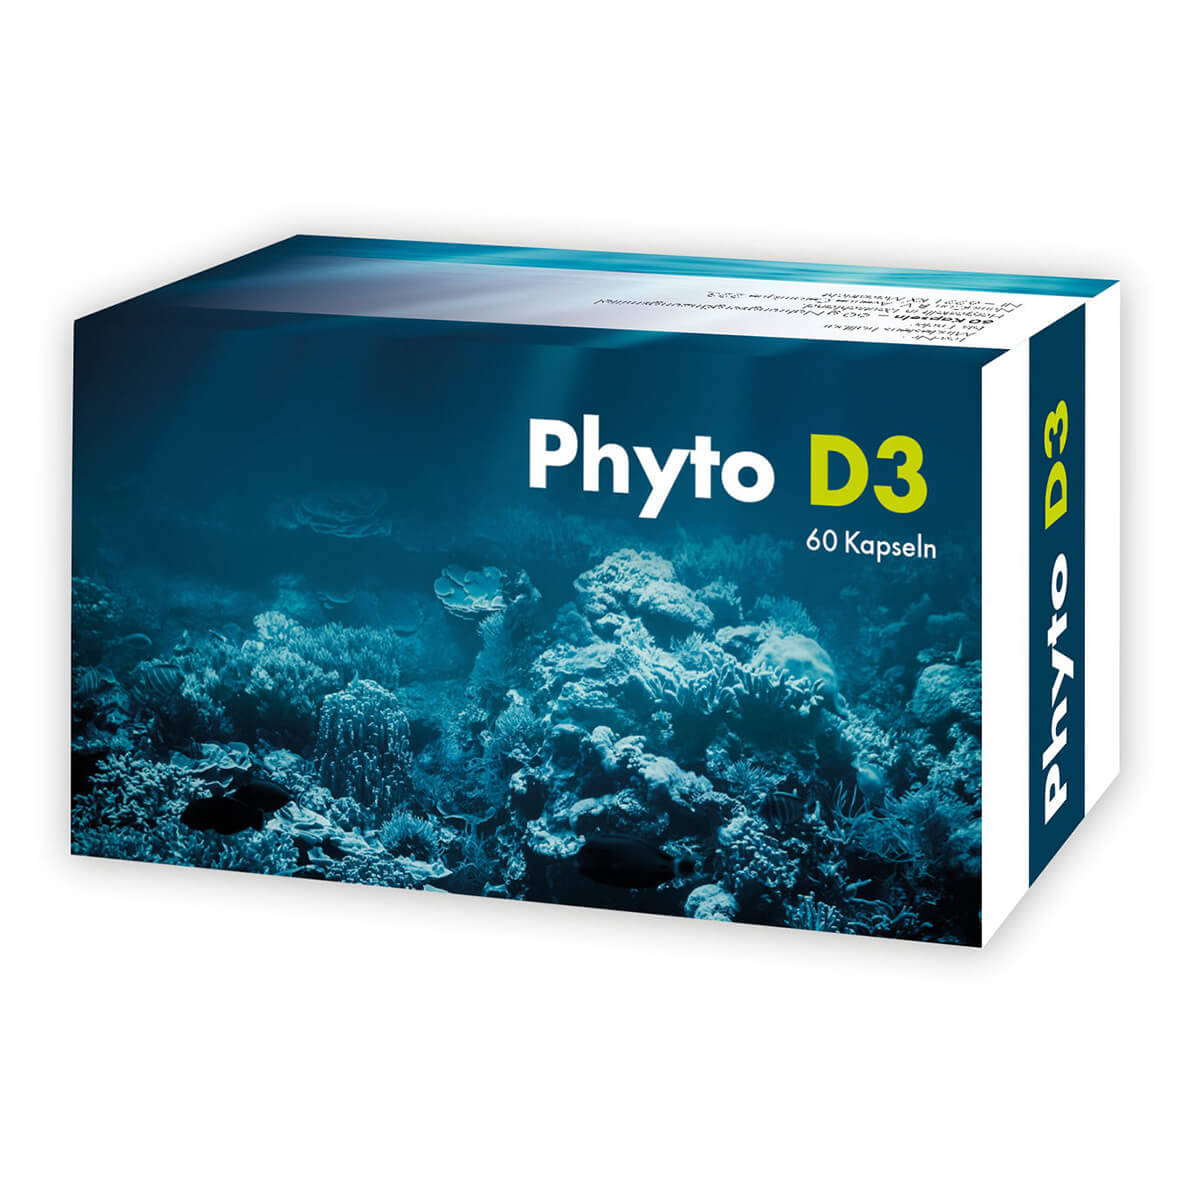 Phyto D3 2-Monatskur 2 Schachteln